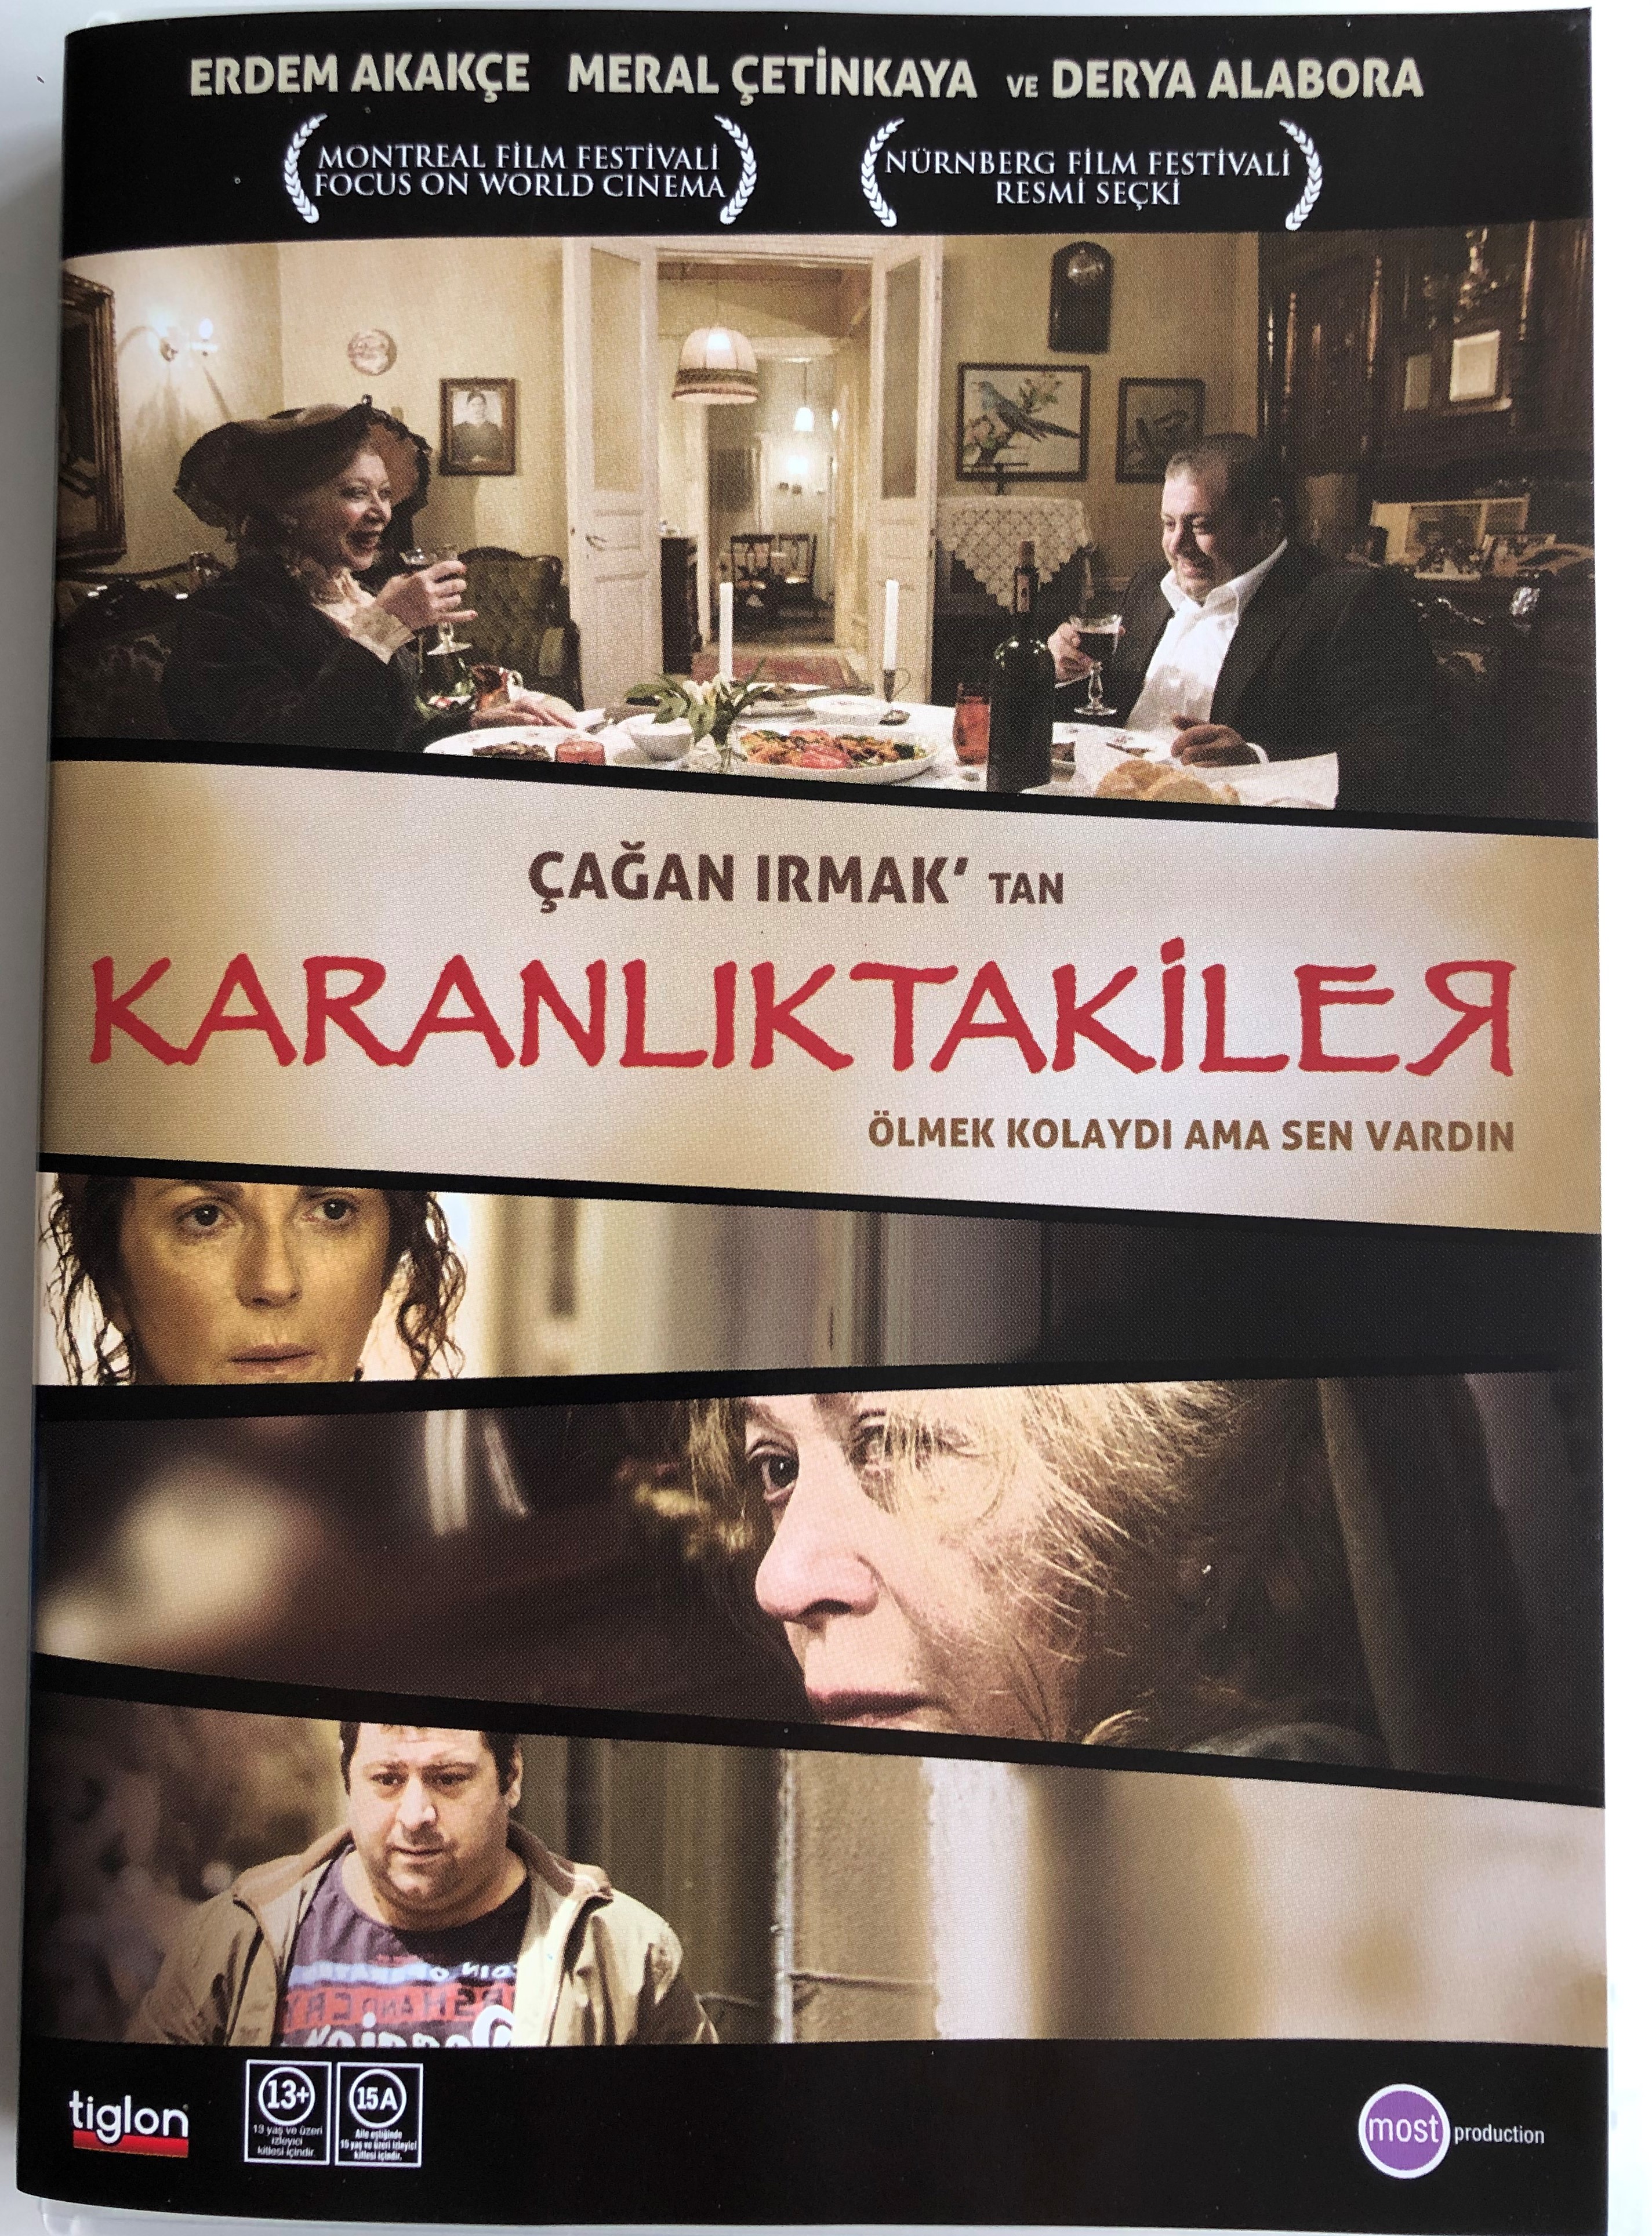 karanliktakiler-dvd-2009-in-darkness-directed-by-a-an-irmak-starring-meral-etinkaya-1-.jpg